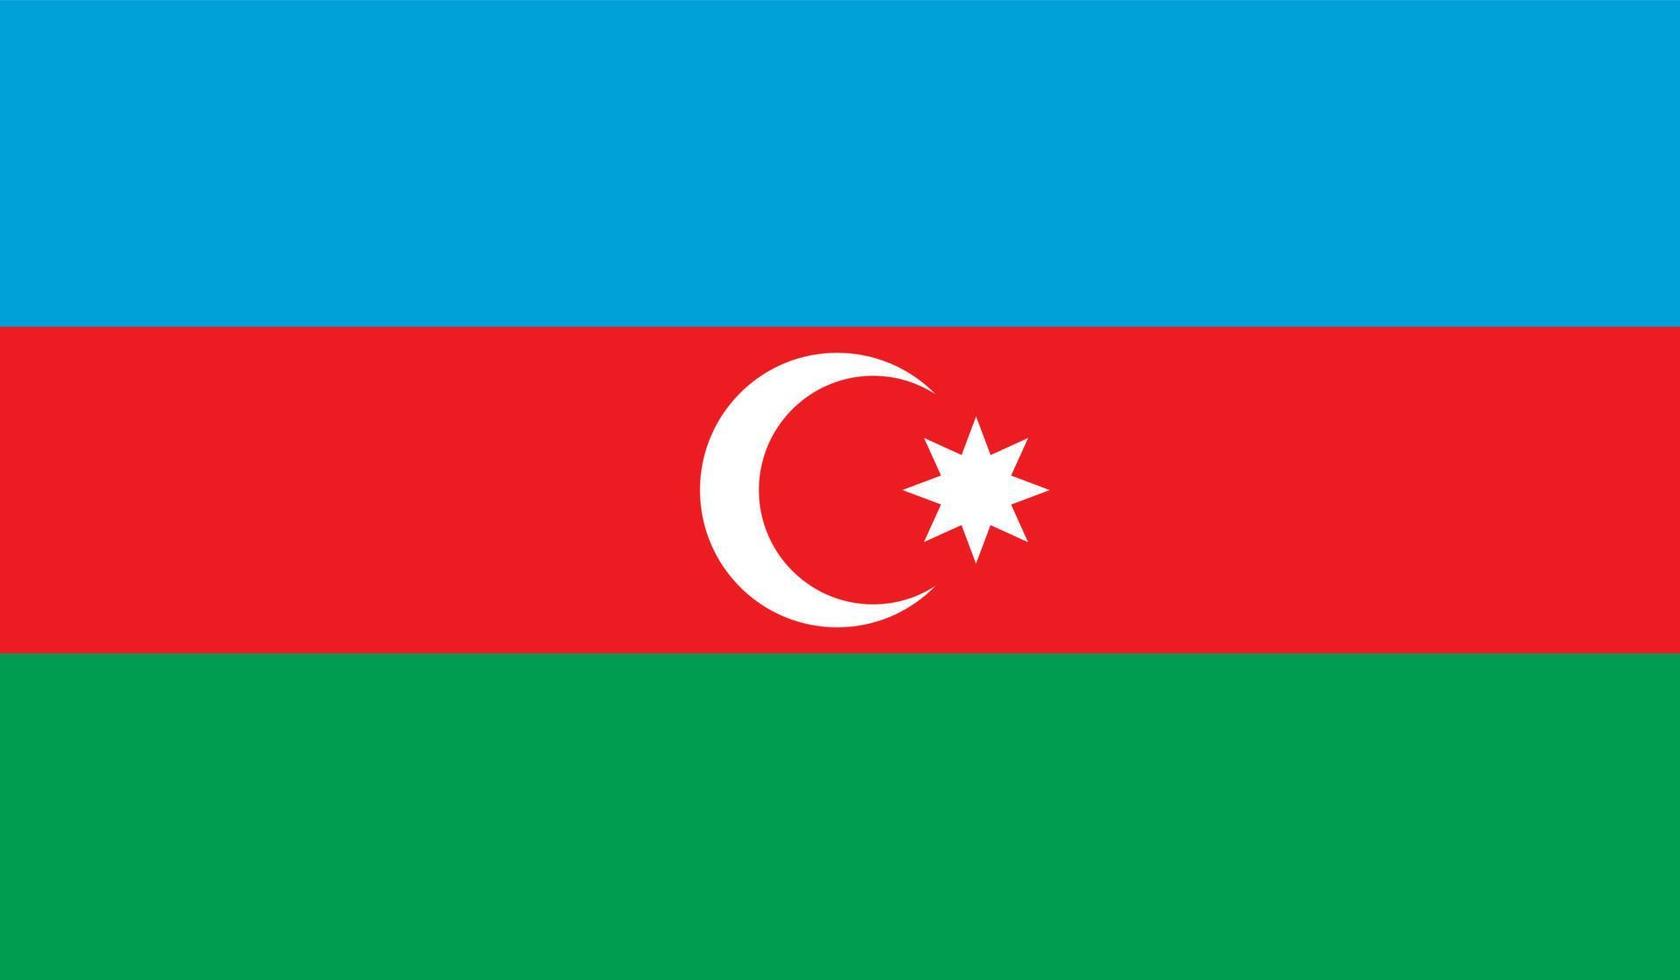 Azerbeidzjan vlag beeld vector